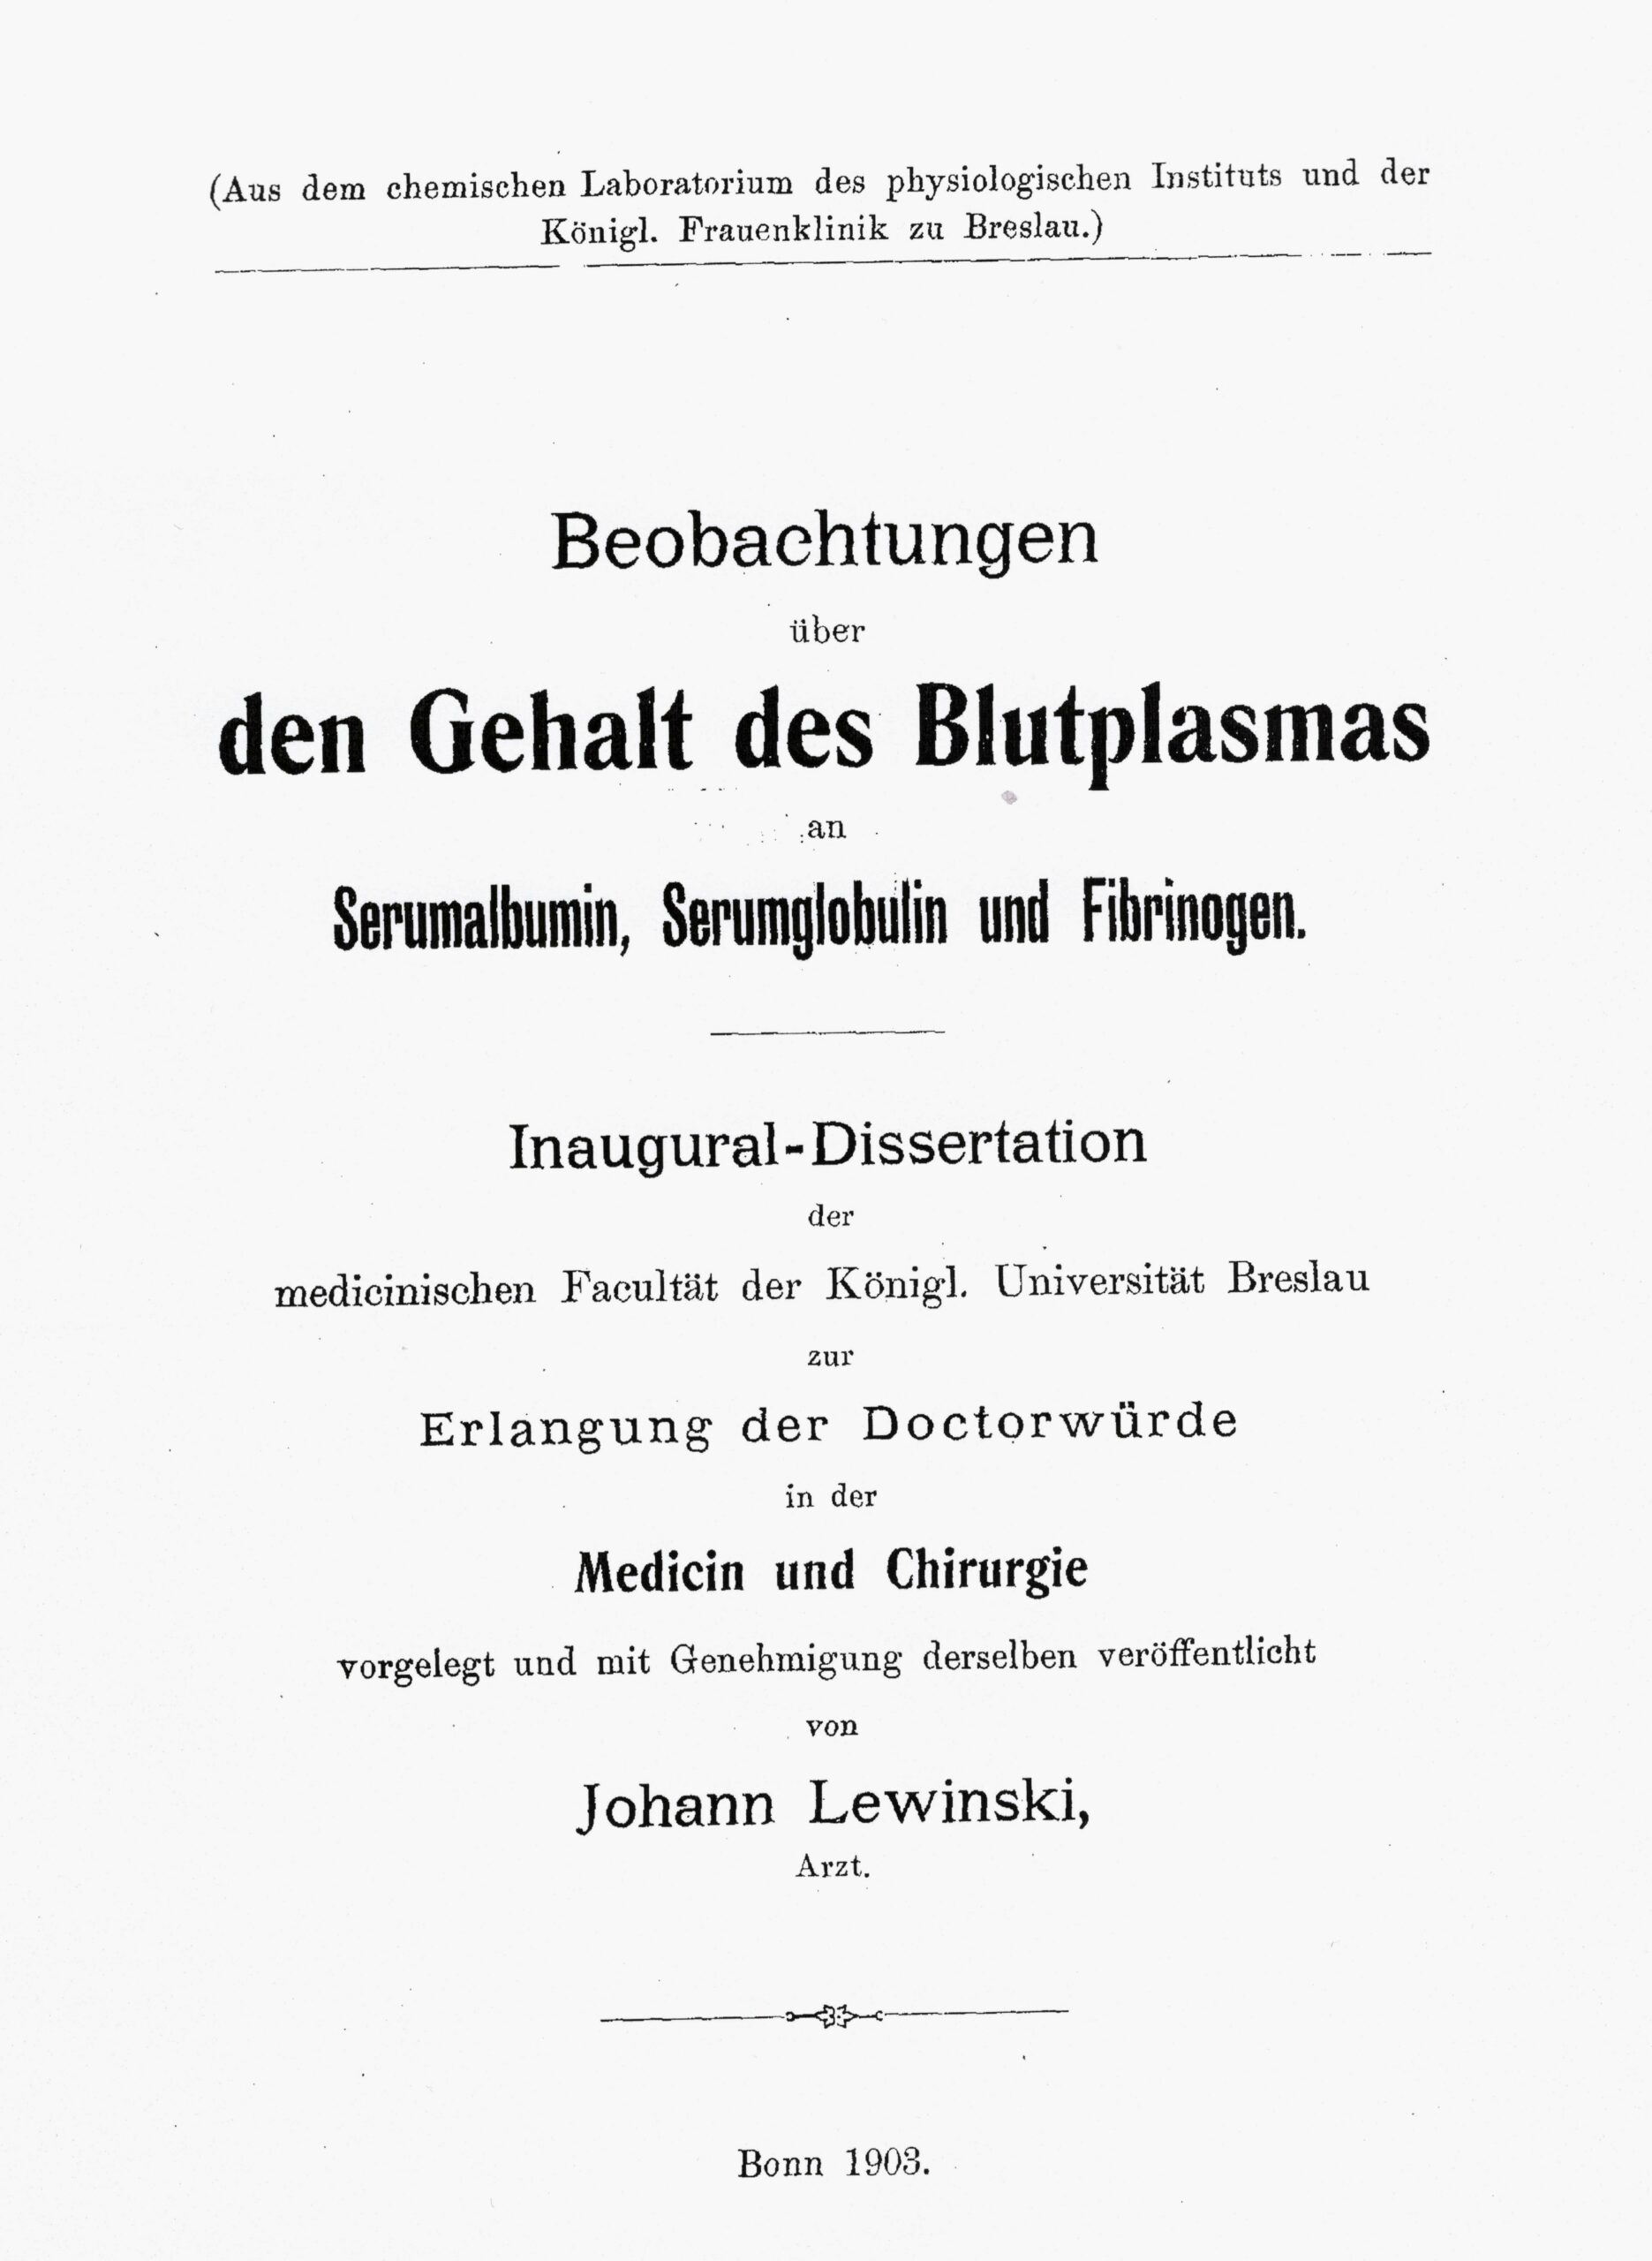 Dissertation, Breslau 1903